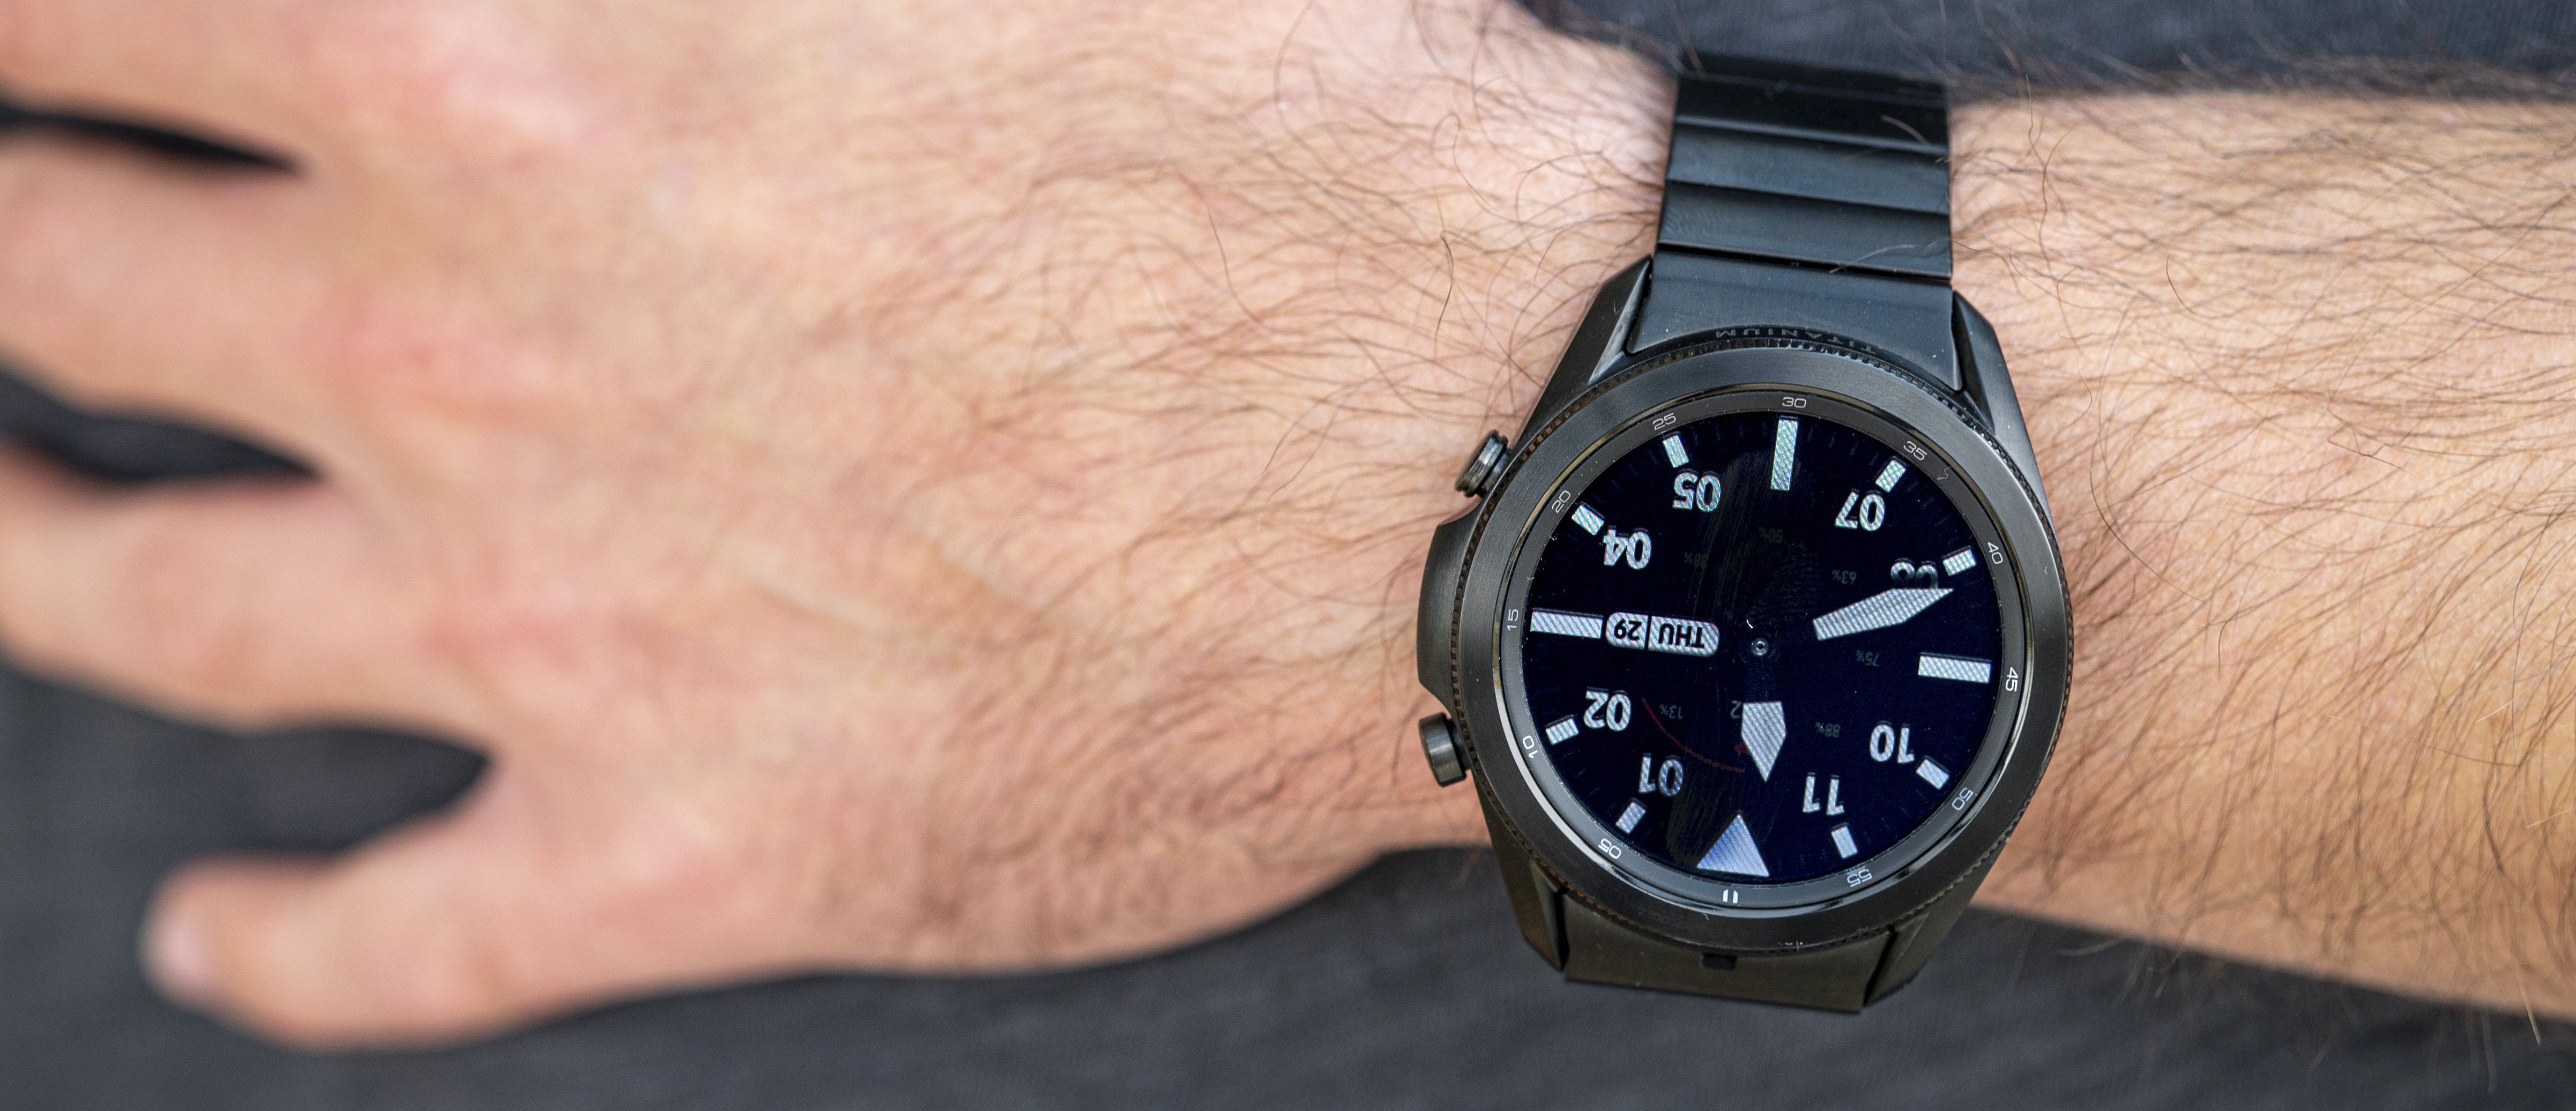 Galaxy watch 45. Самсунг галакси вотч 3. Самсунг галакси вотч 3 45 мм. Samsung Galaxy watch 3 Titanium. Samsung Galaxy watch 3 45mm Titanium.